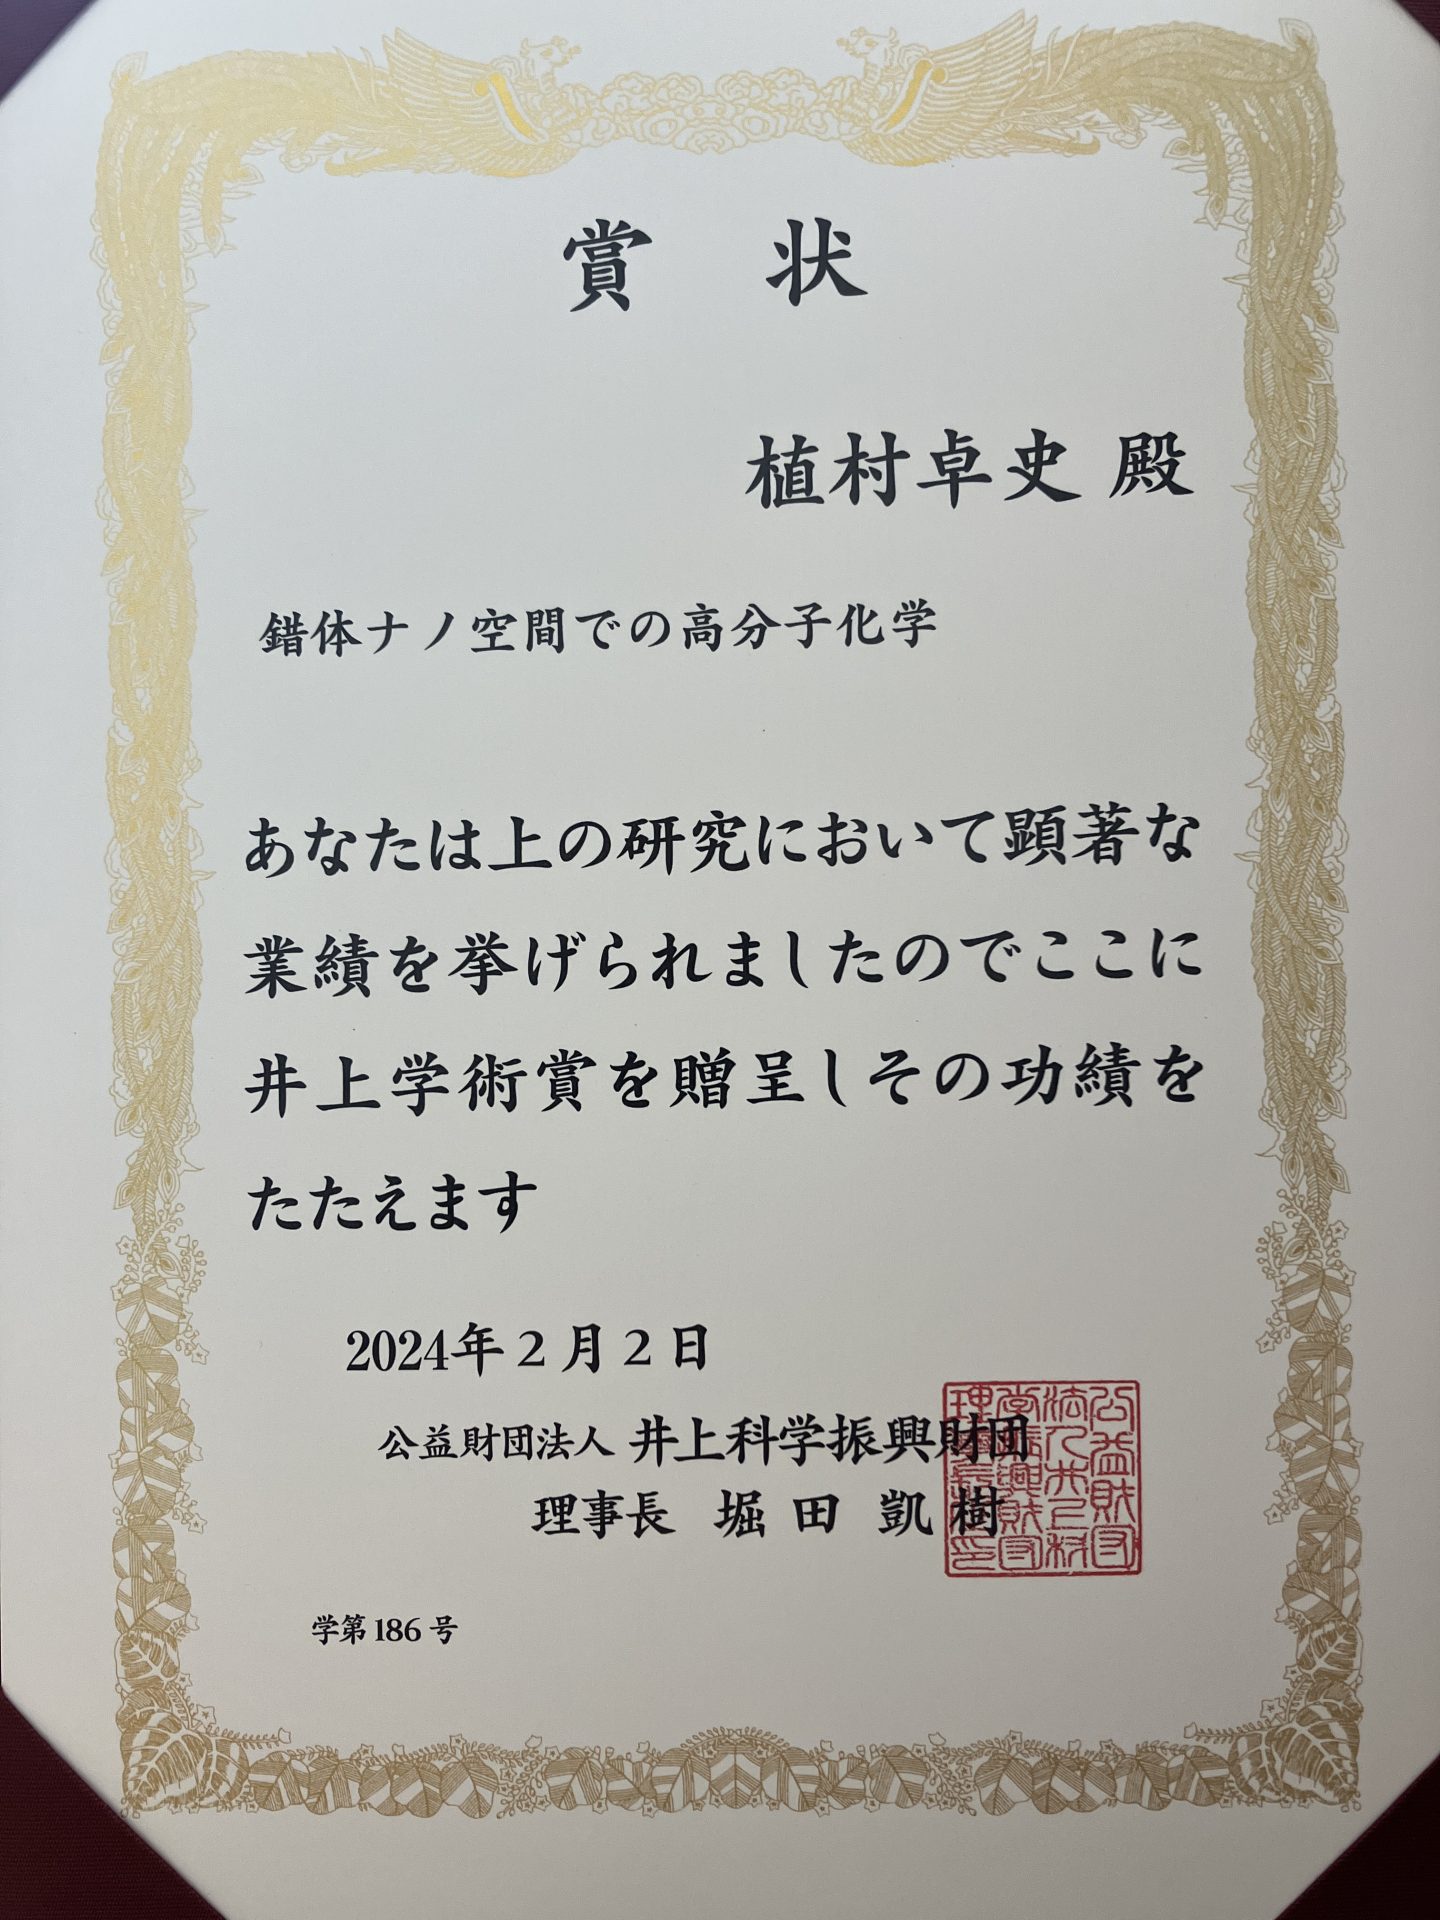 Inoue Prize Certificate